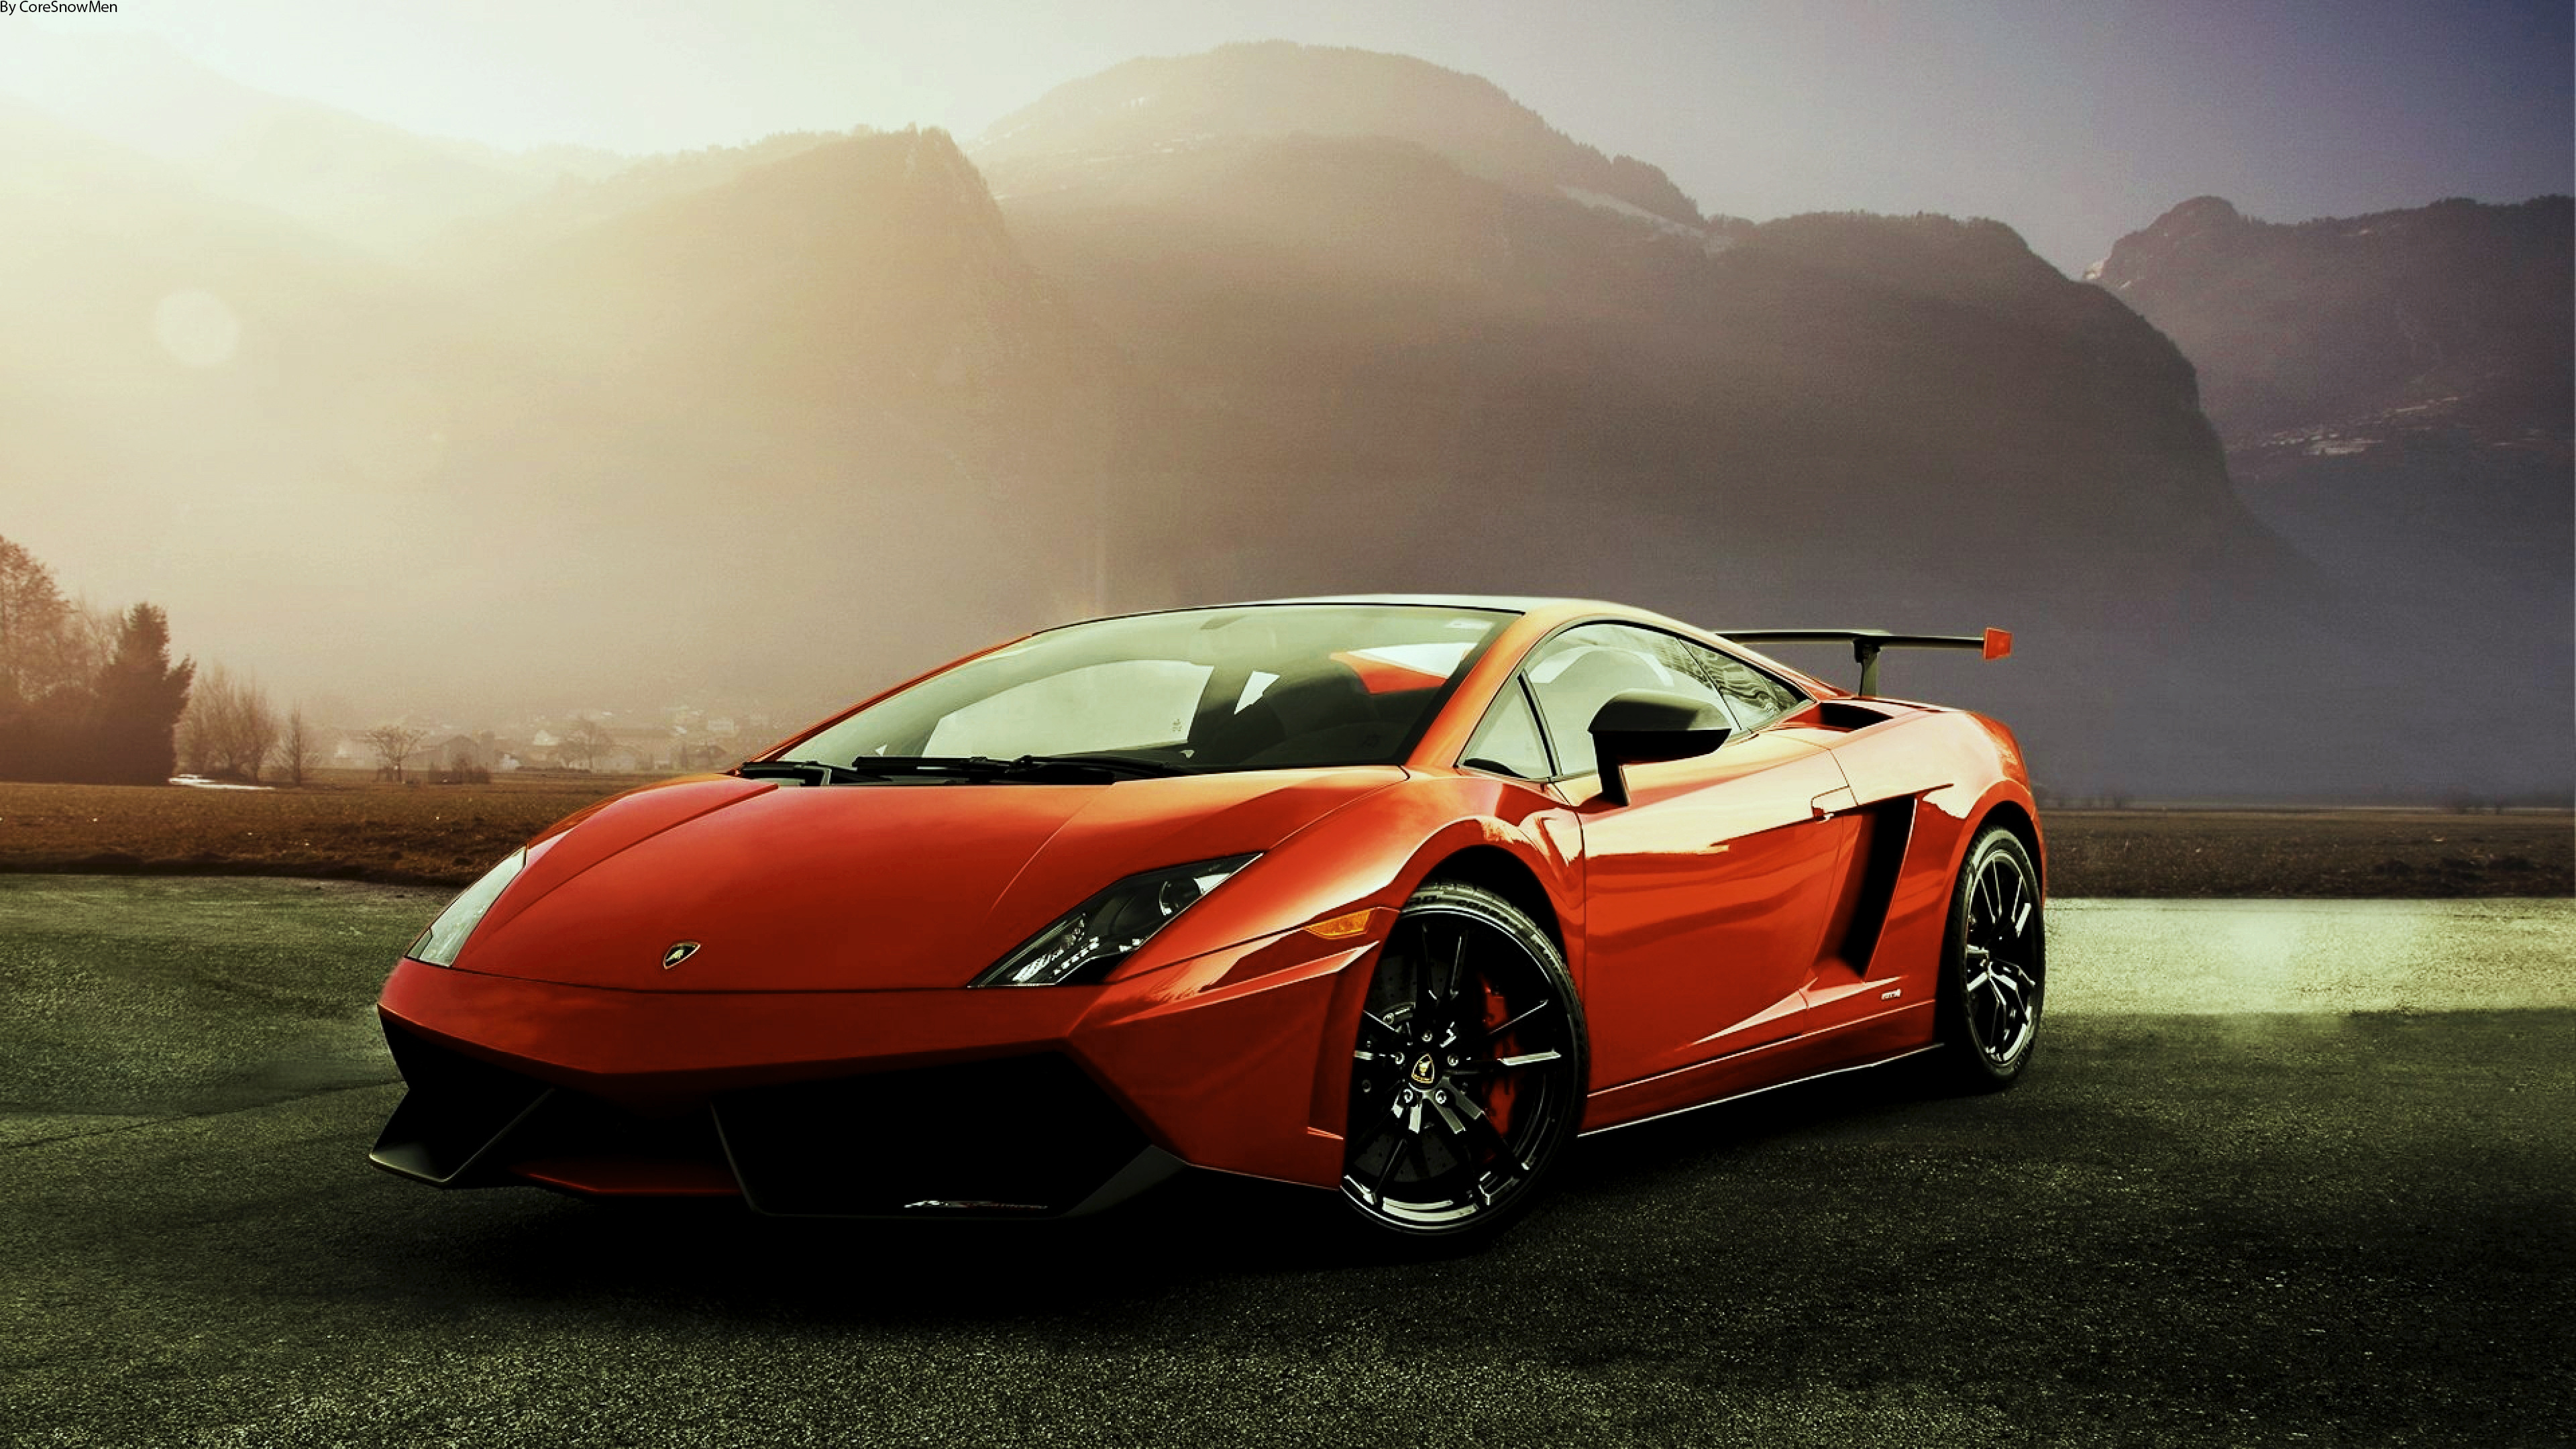 Lamborghini Gallardo, Auto wallpapers, Car images, Luxury vehicles, 3840x2160 4K Desktop